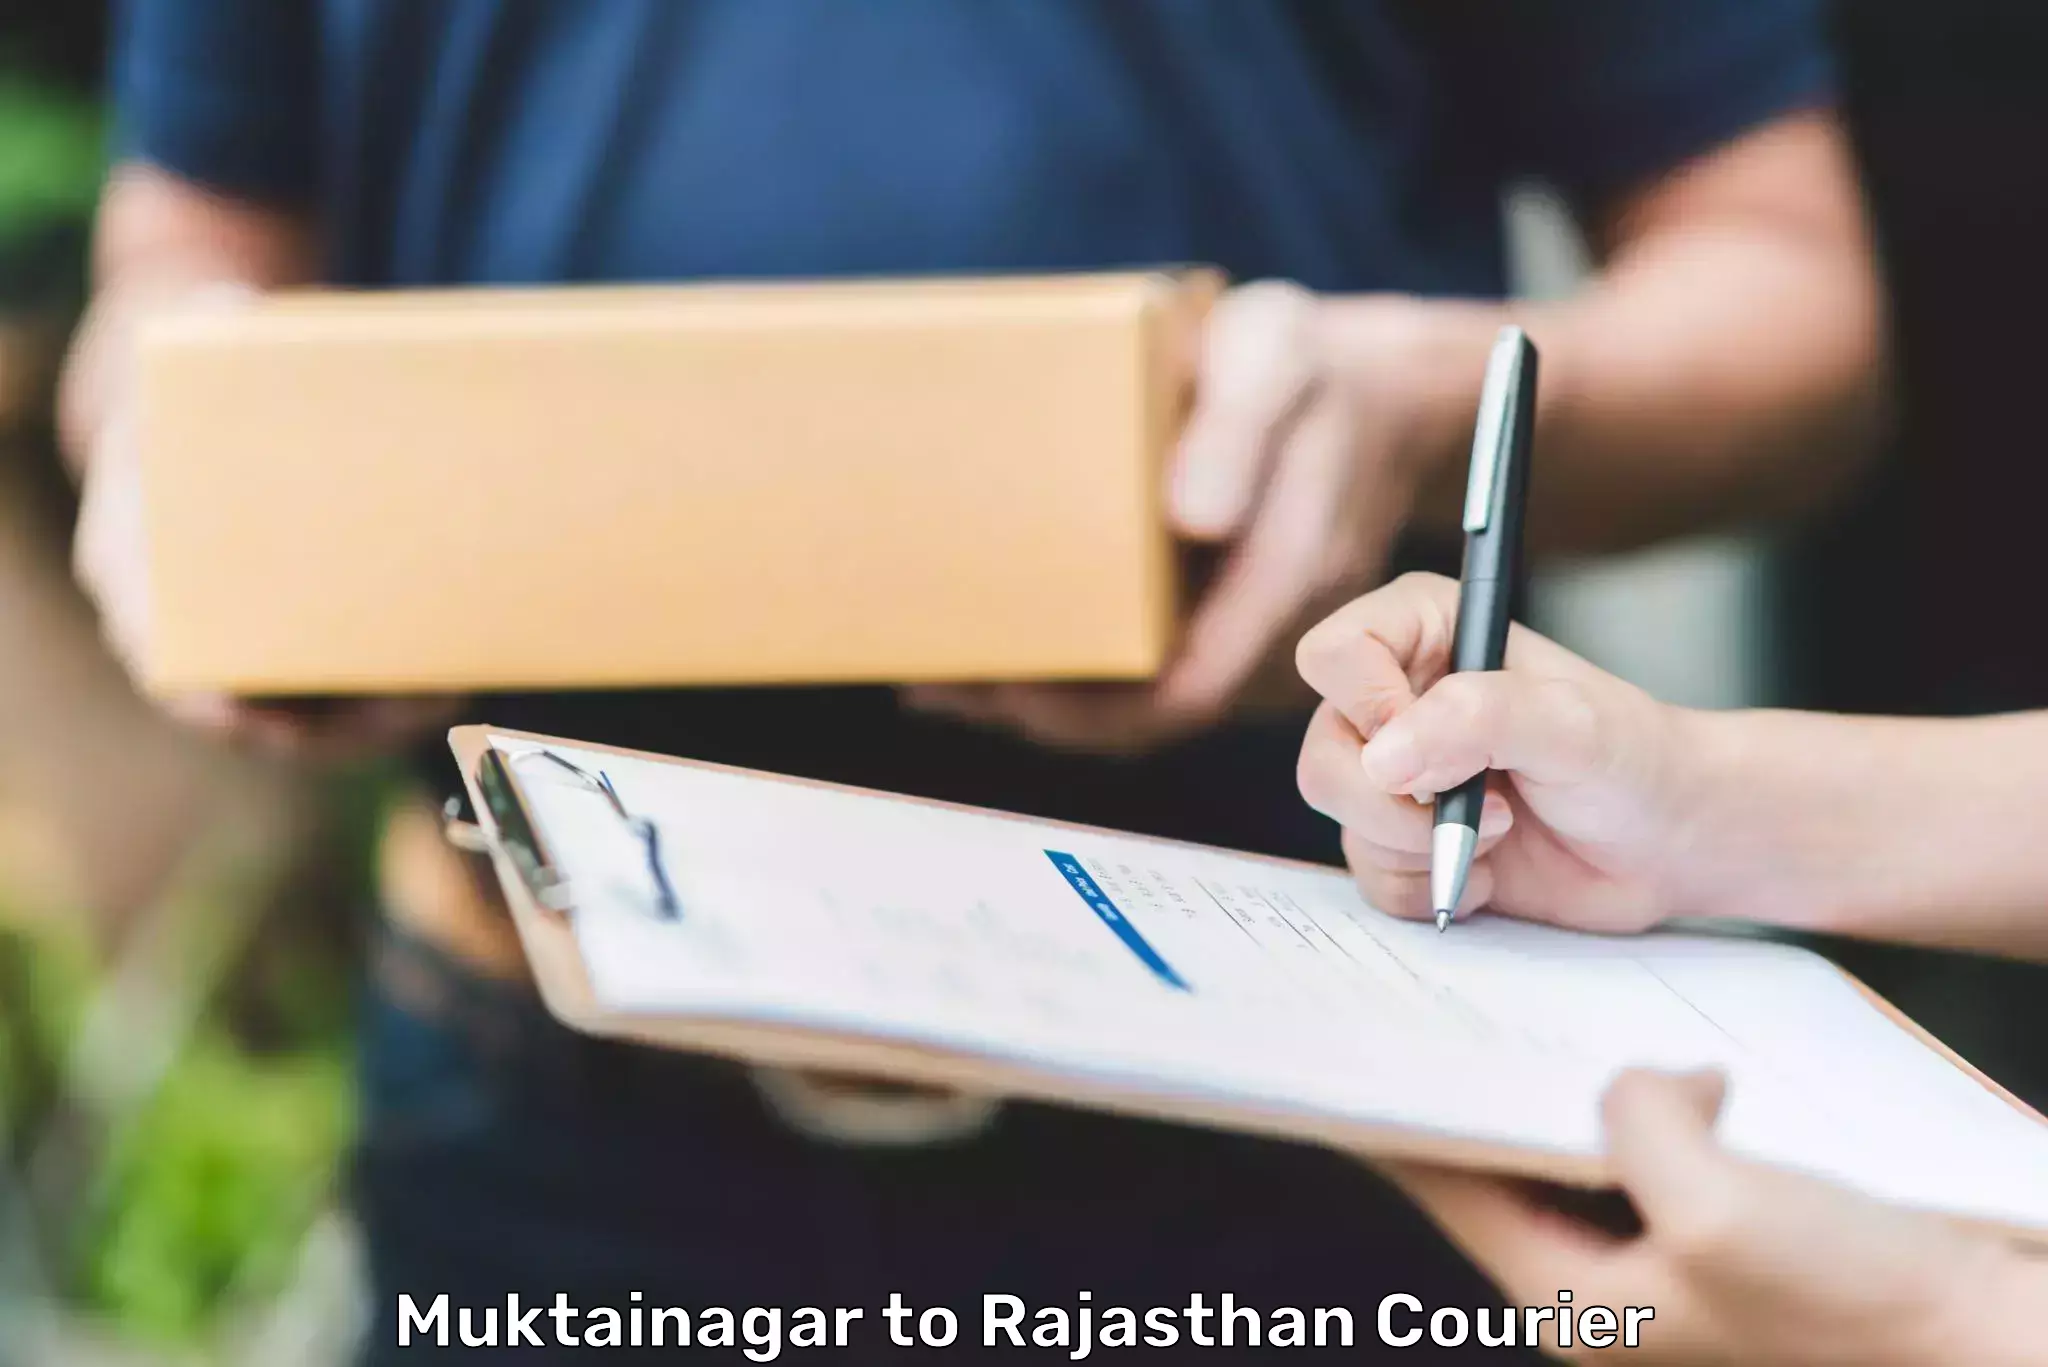 Courier service comparison in Muktainagar to Abu Road